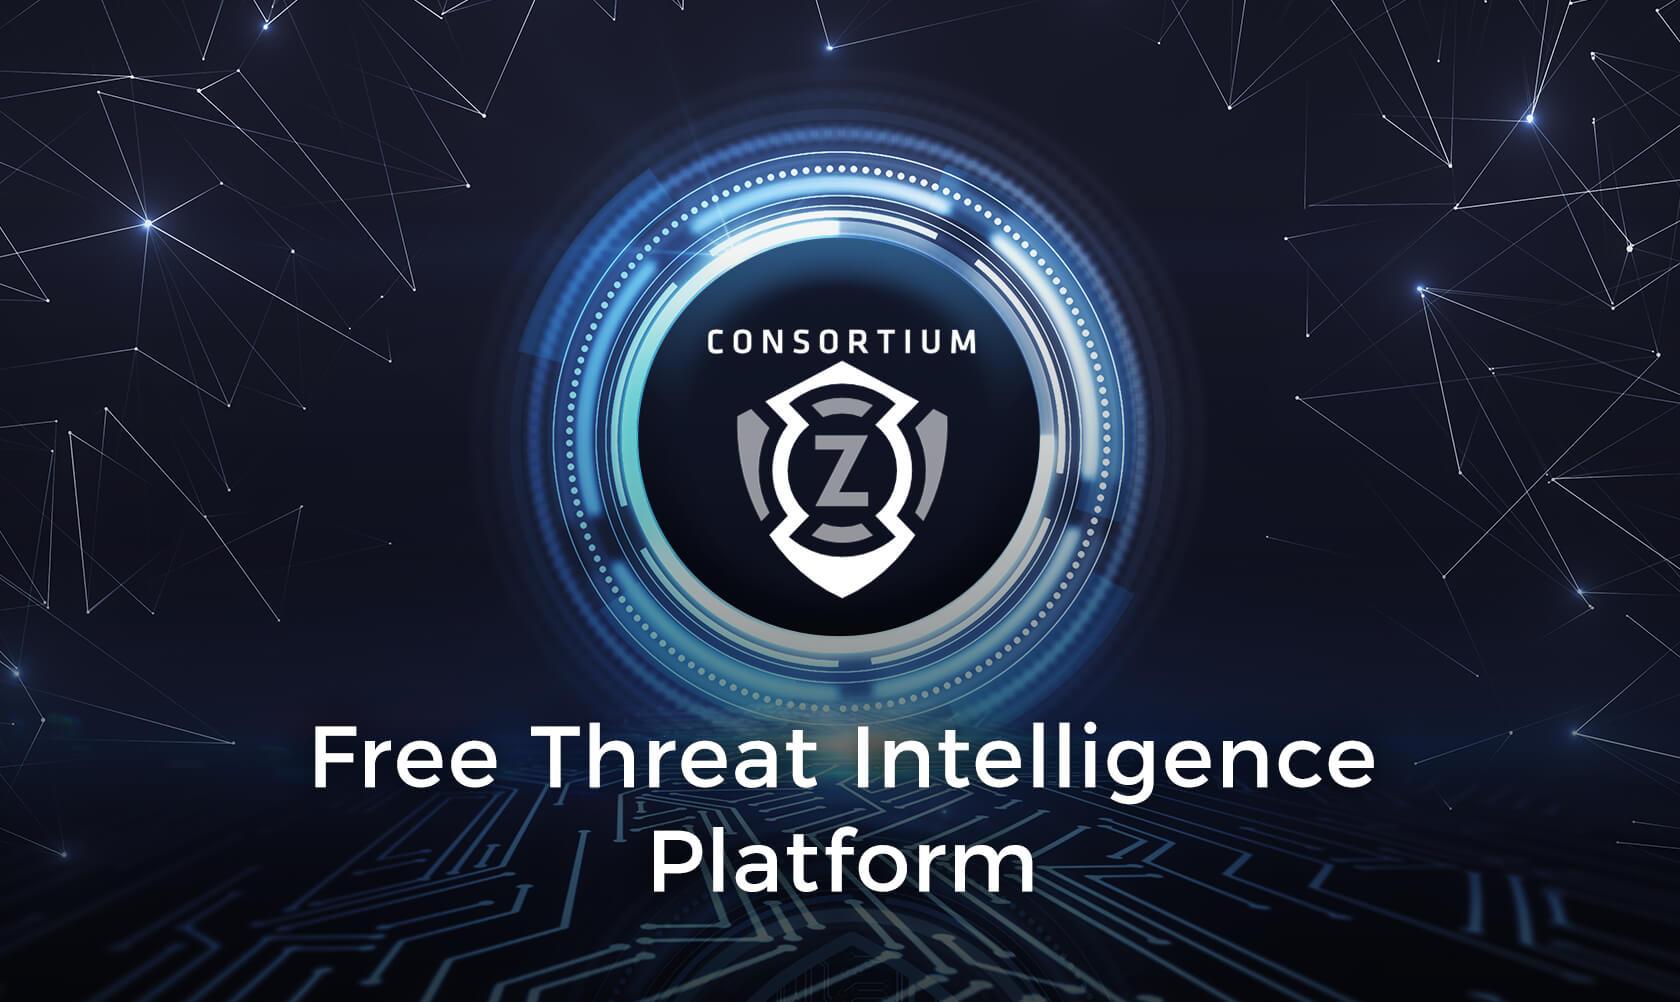 Product Consortium Networks Announces General Availability of Consortium Z Threat Intelligence Platform - Consortium Networks image